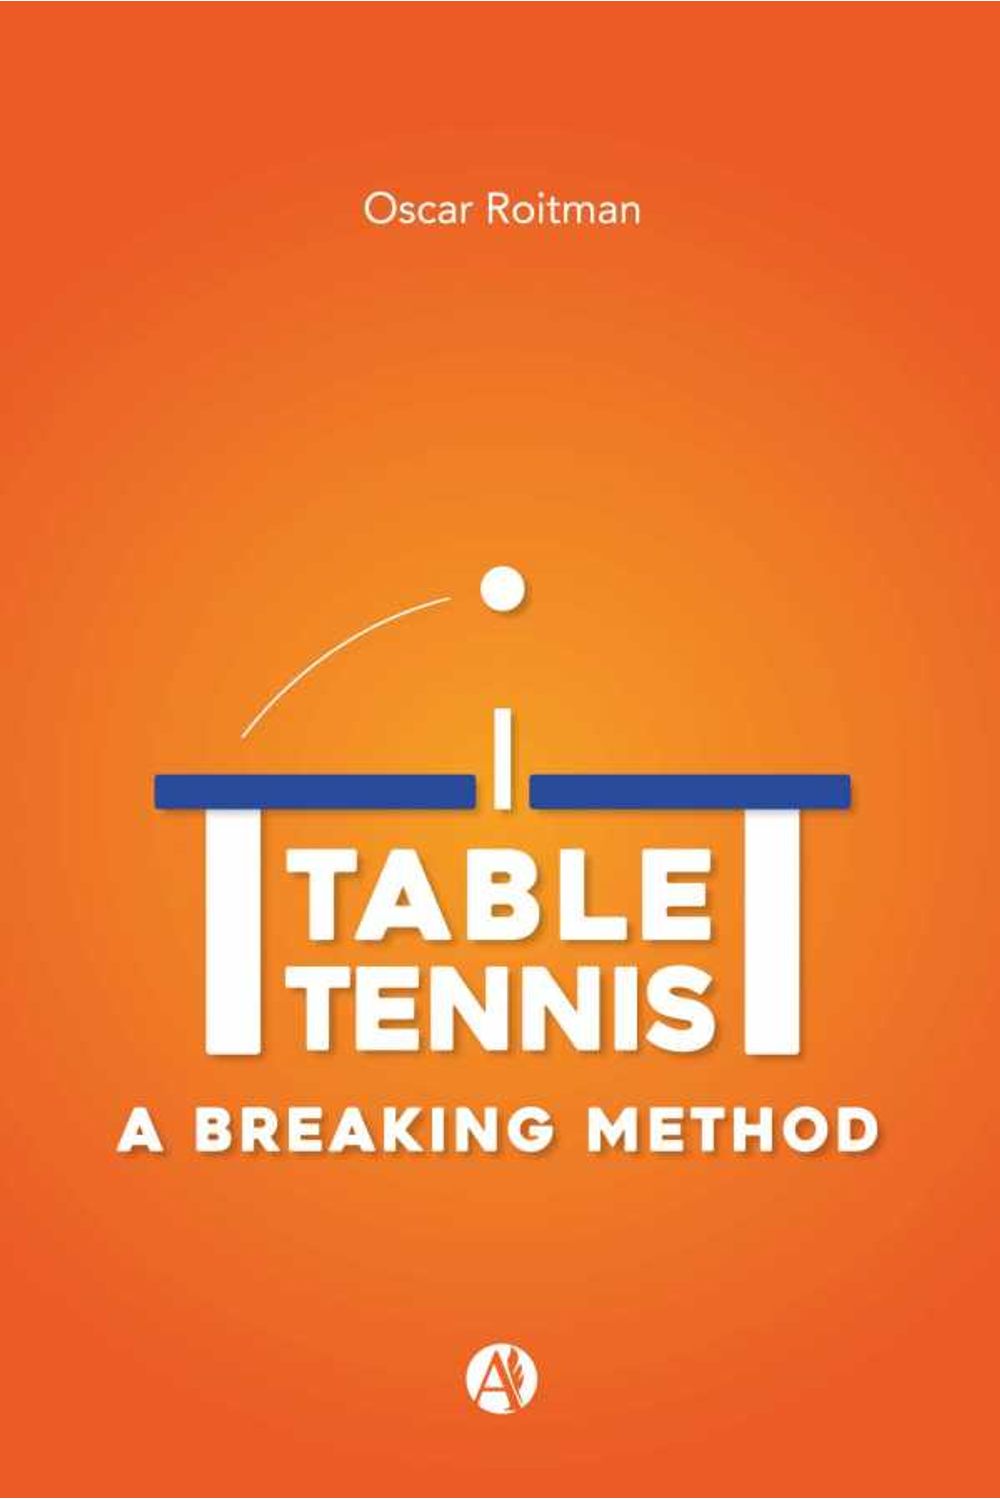 bw-table-tennis-editorial-autores-de-argentina-9789878717647